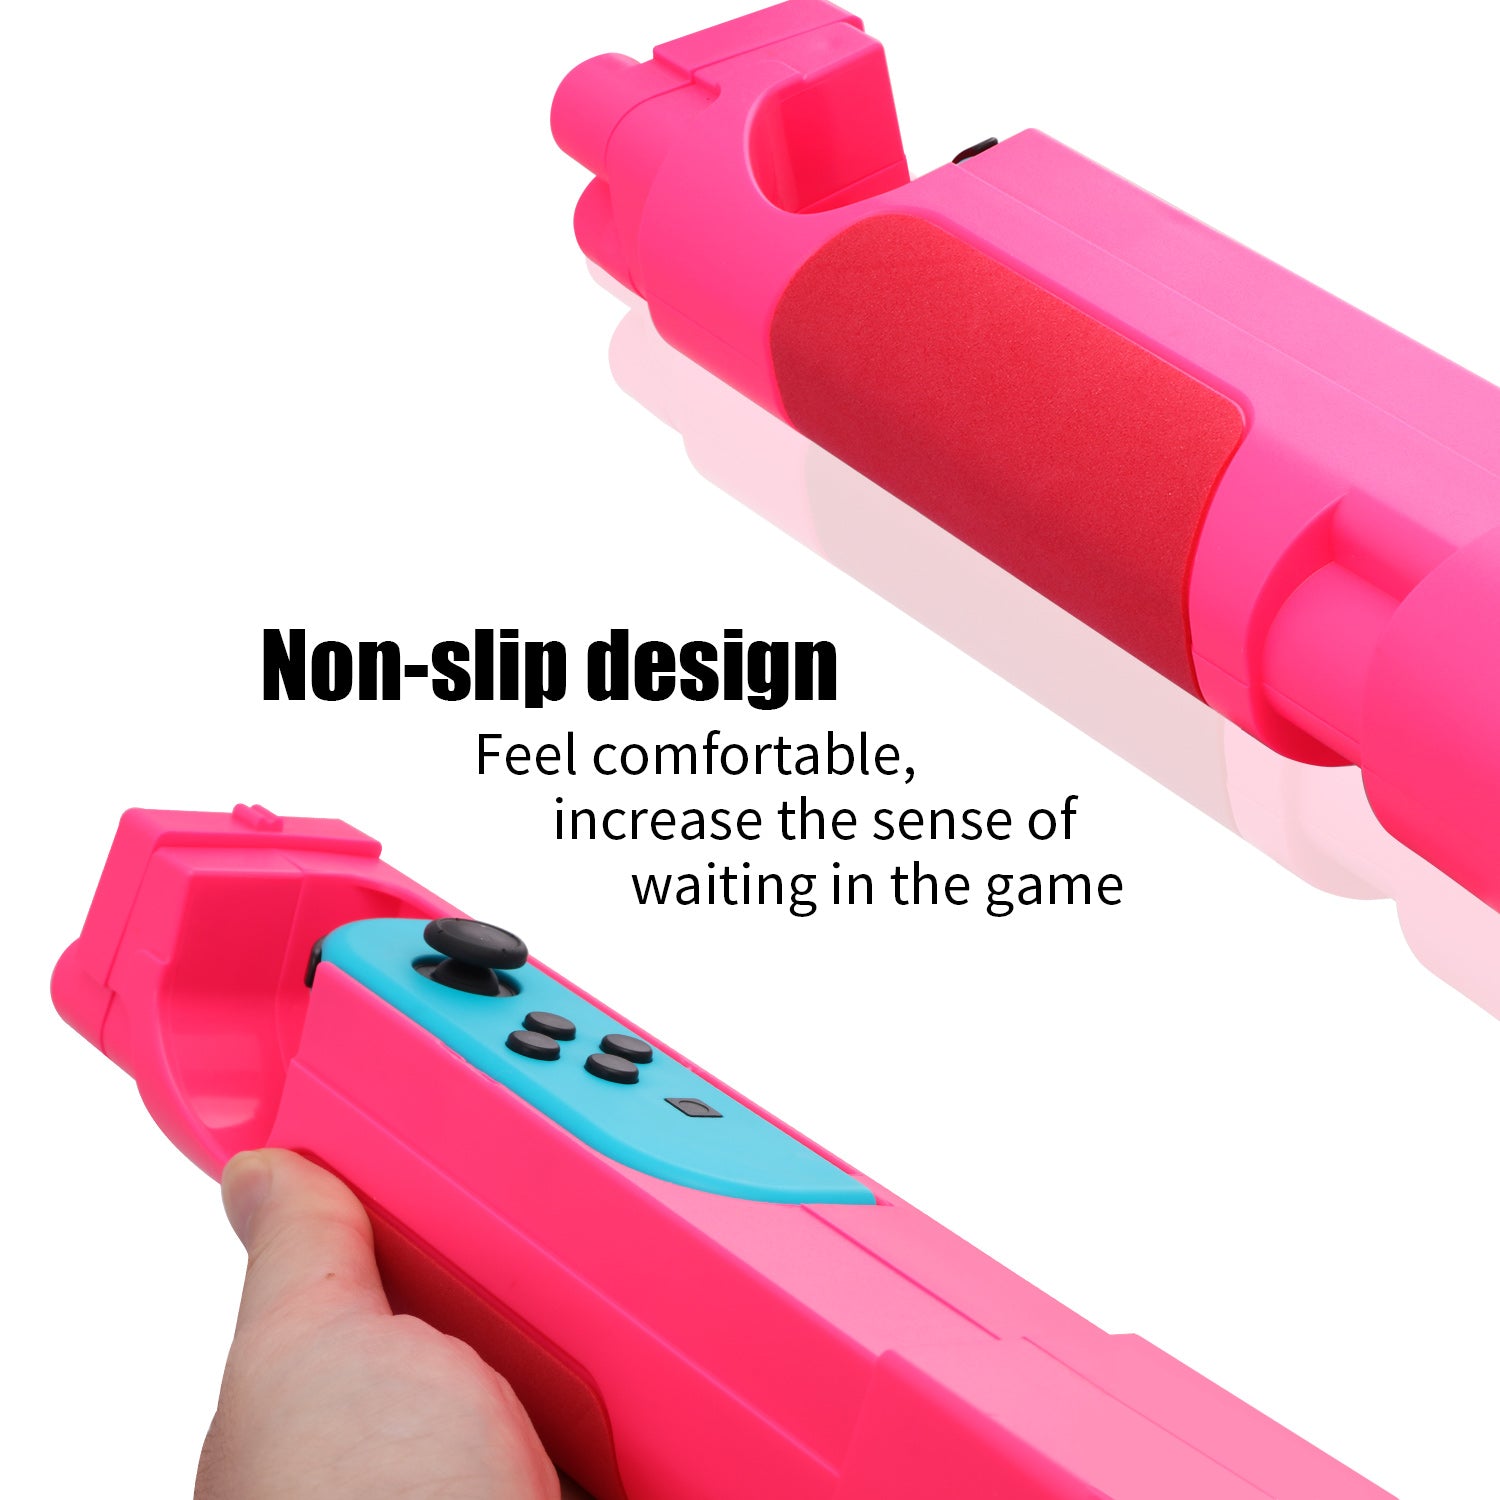 Nintendo Switch Gun for Big Buck Hunter